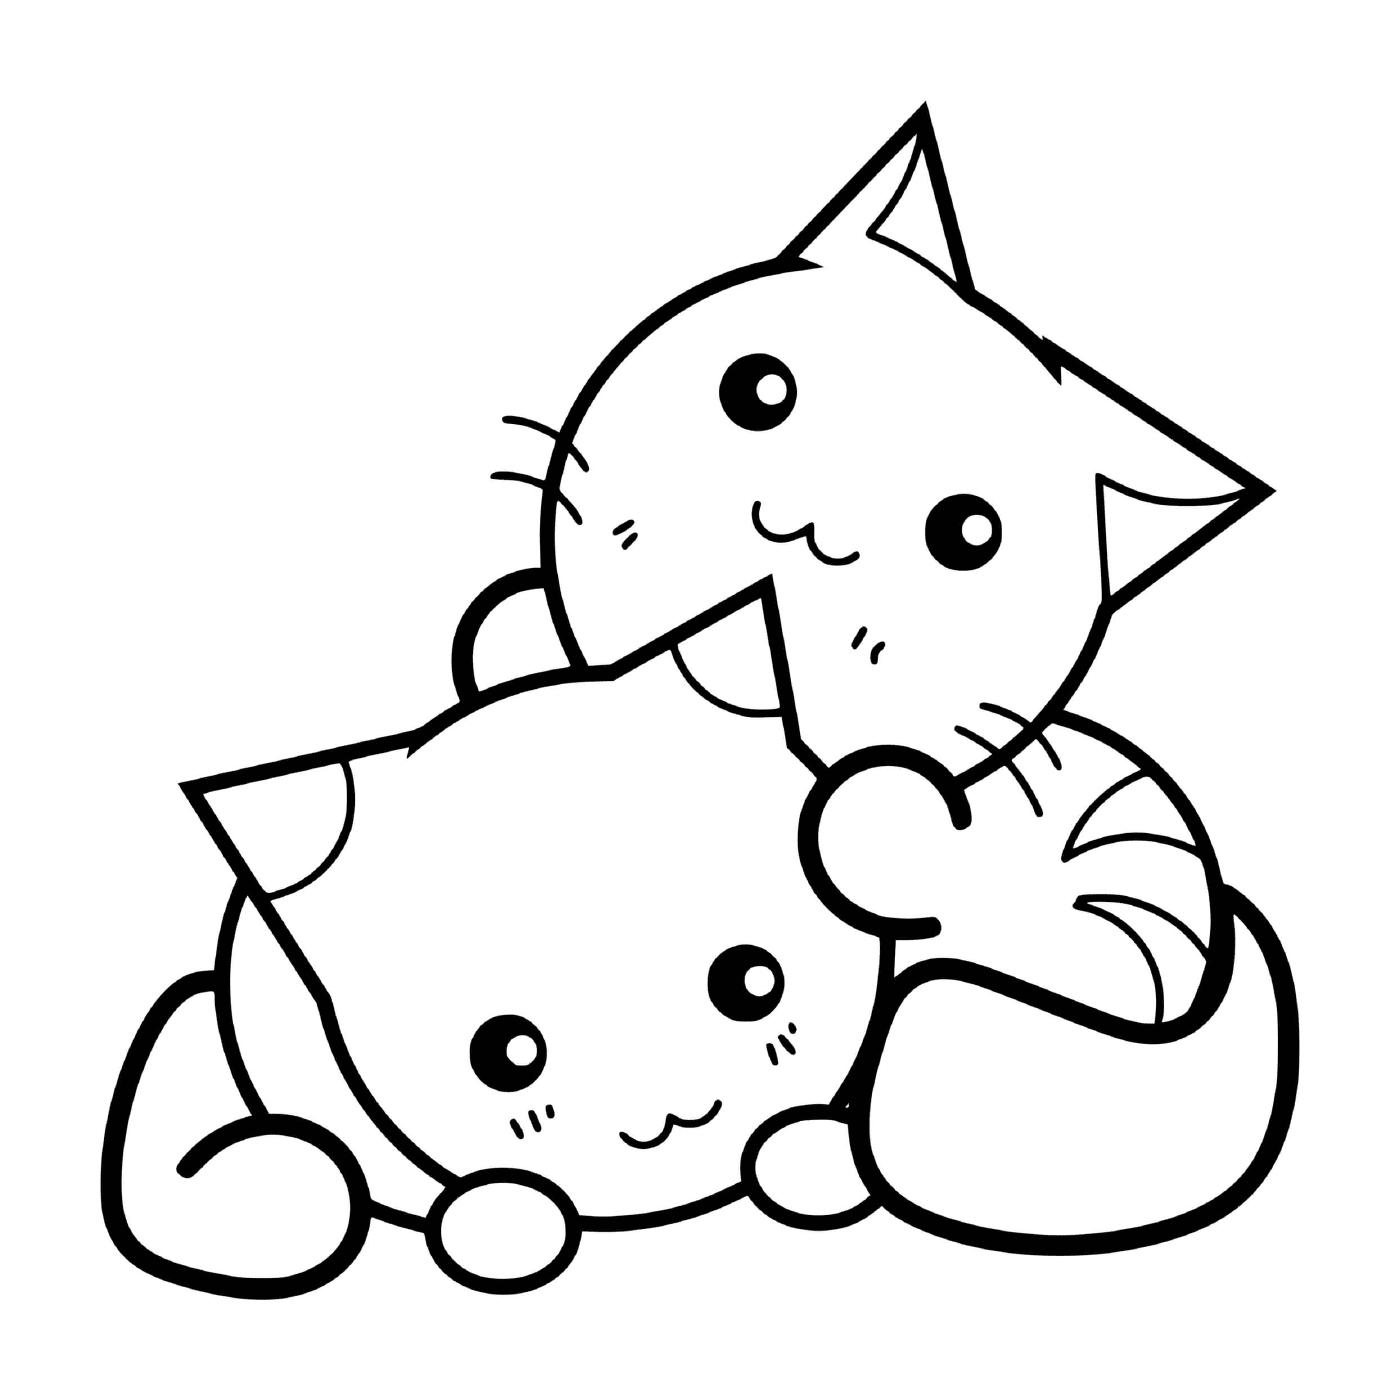  Kawaii Kätzchen umarmen ein anderes Kätzchen 